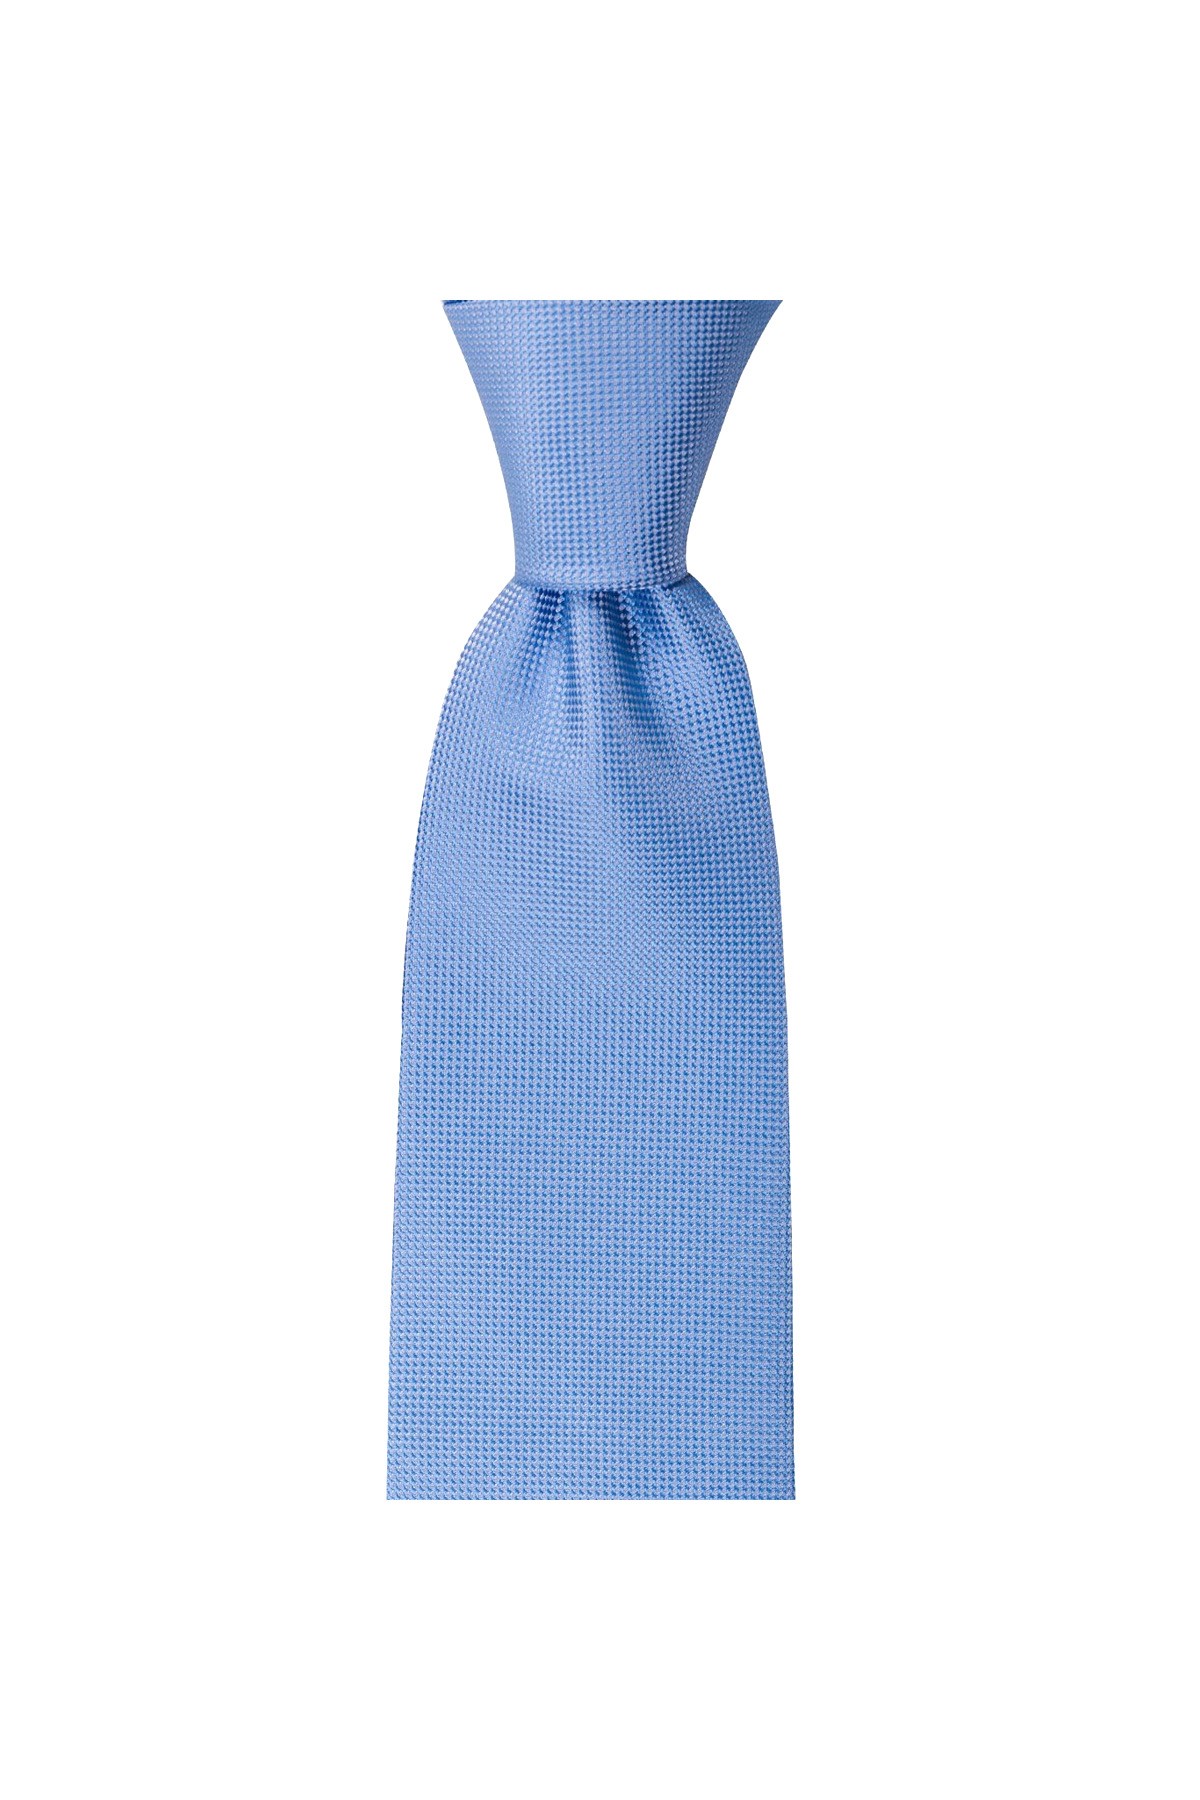 Düz renkli 8 cm genişliğinde mendilli kravat - Mavi